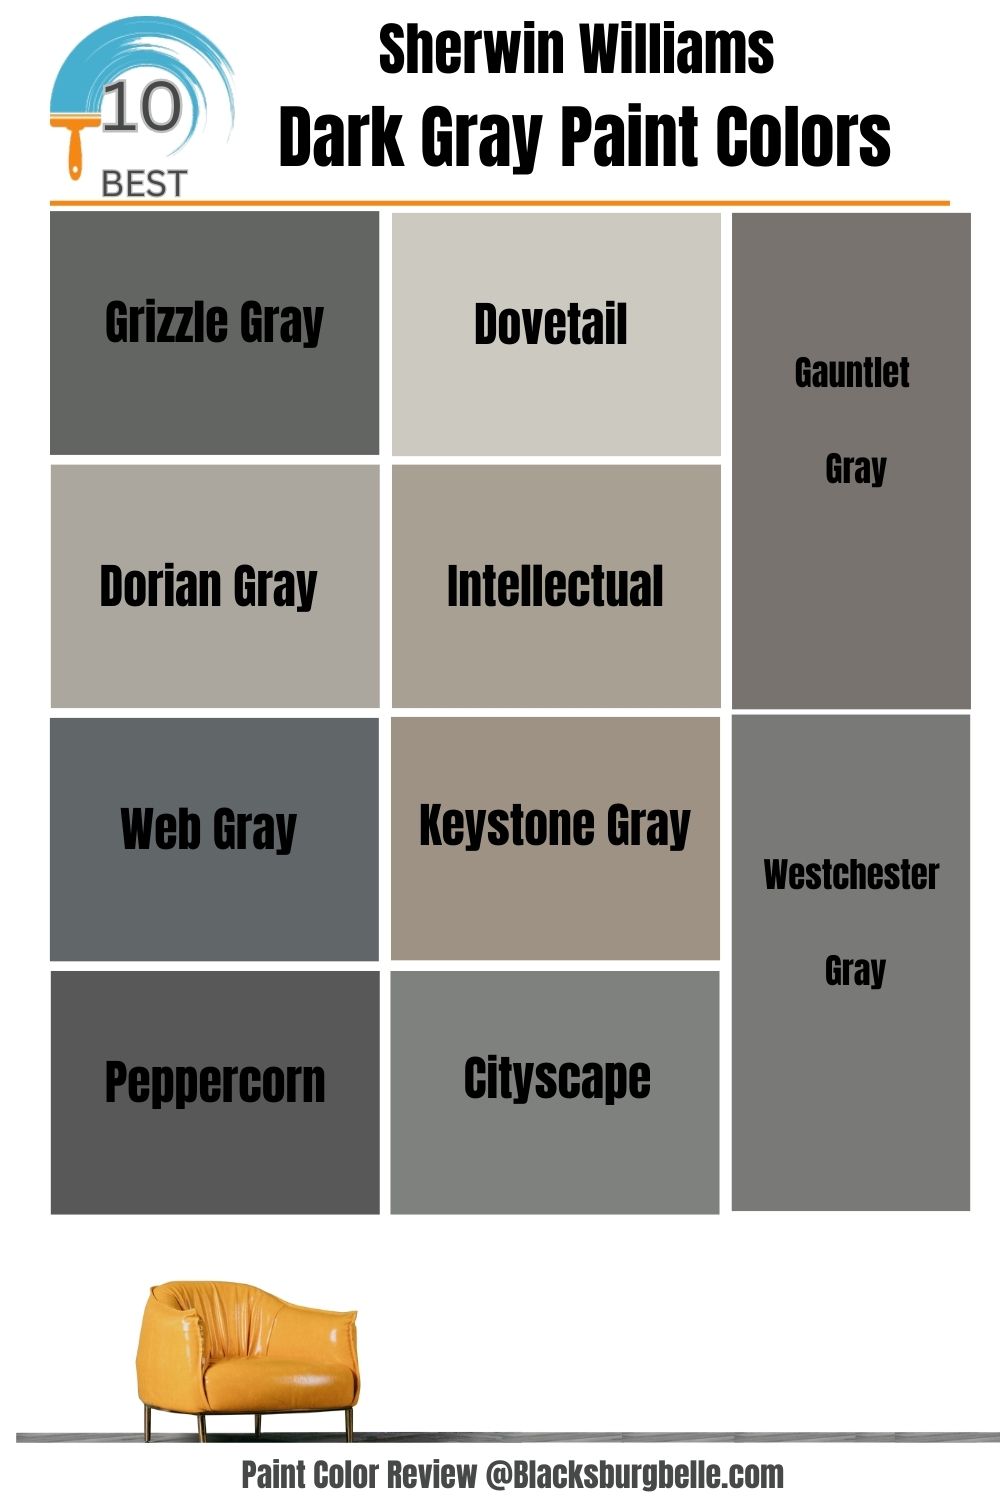 Sherwin Williams Dark Gray Paint Colors